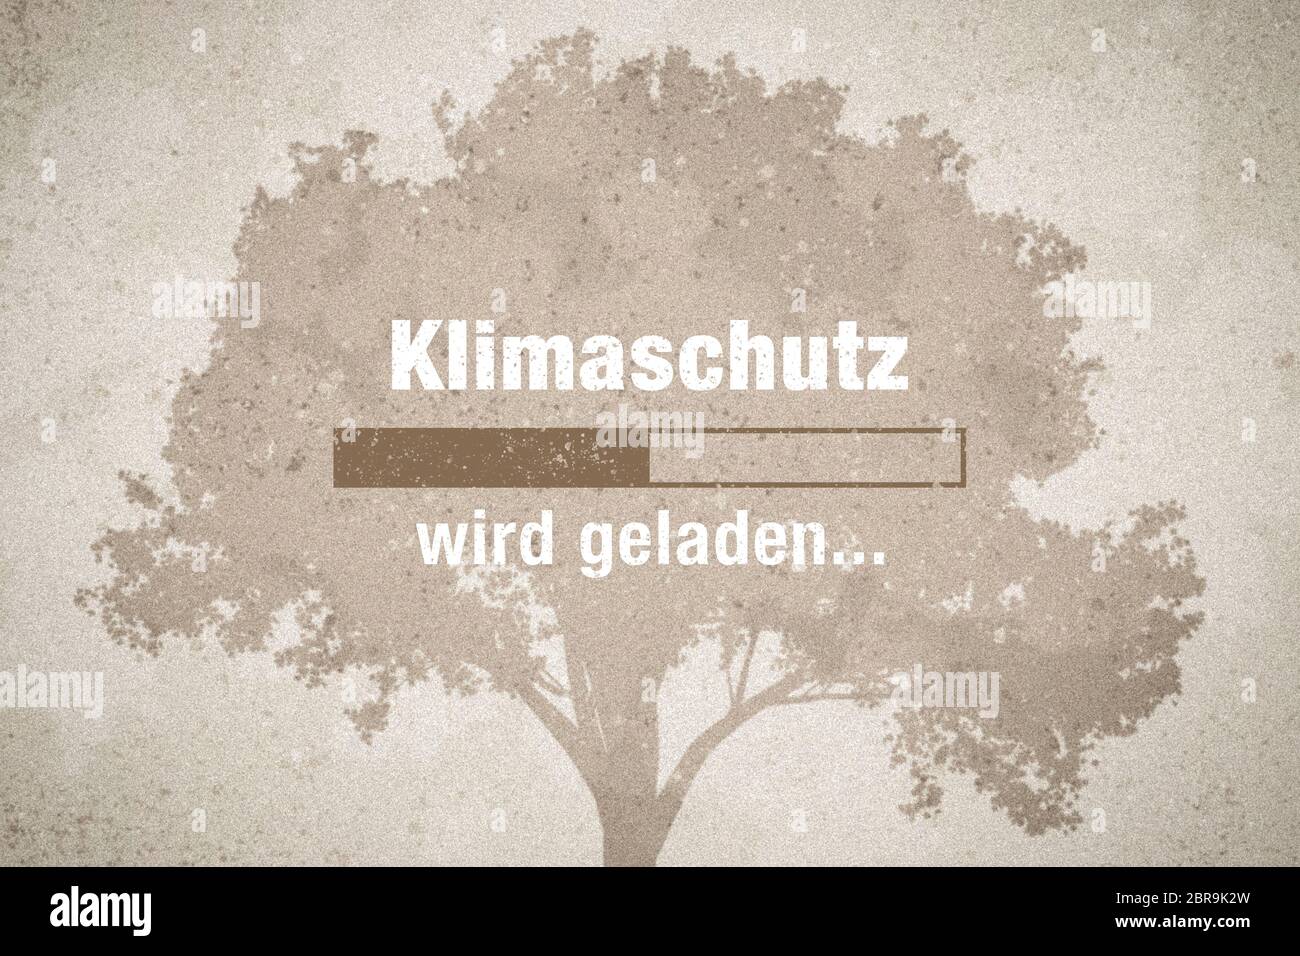 Klimaschutz wird geladen - german text - translation: climate protection loading Stock Photo